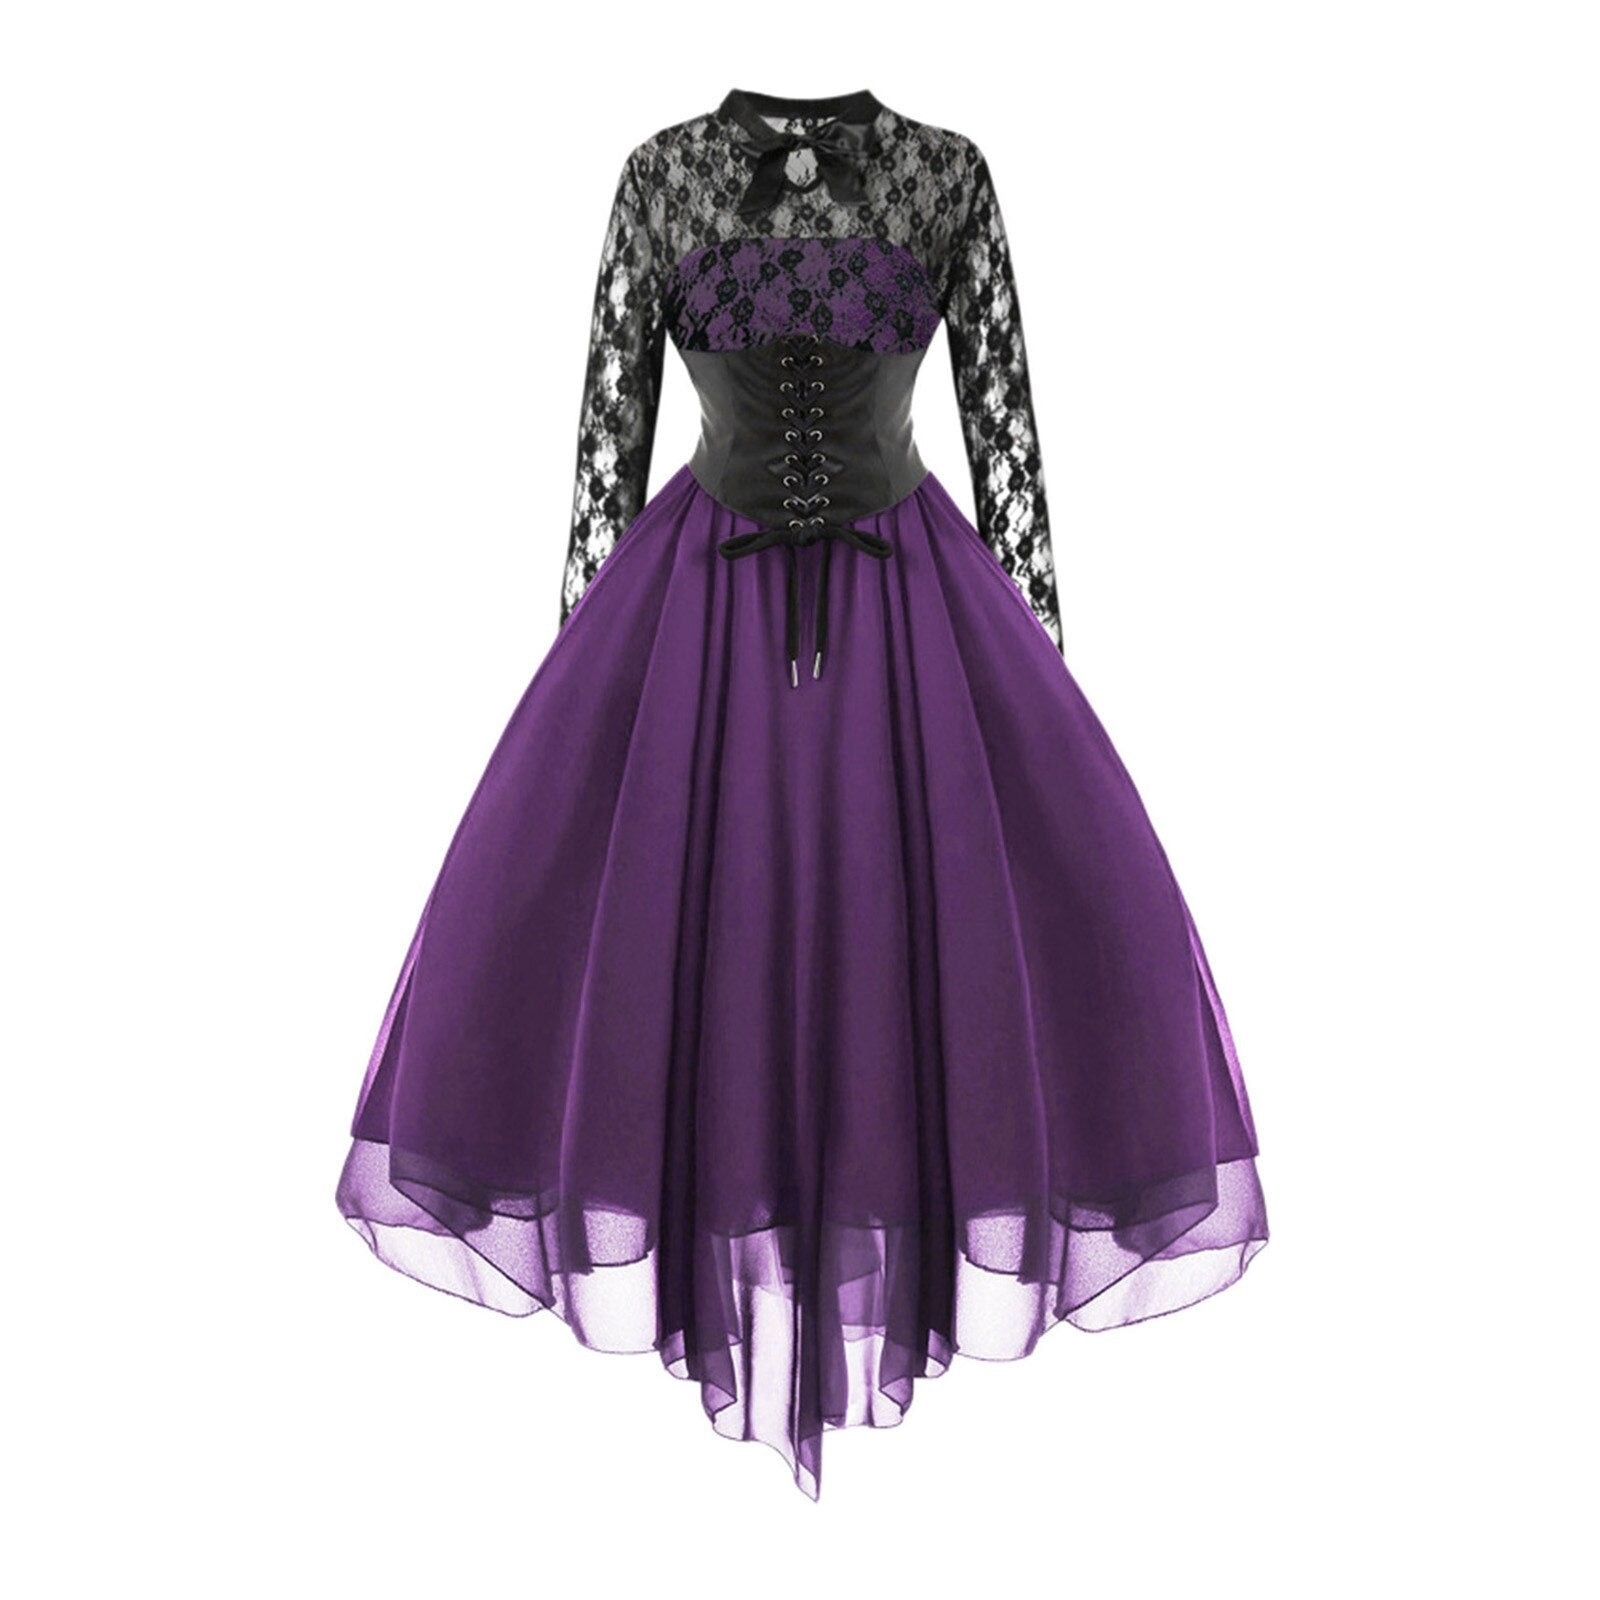 Long Sleeve Lace Gothic Dress